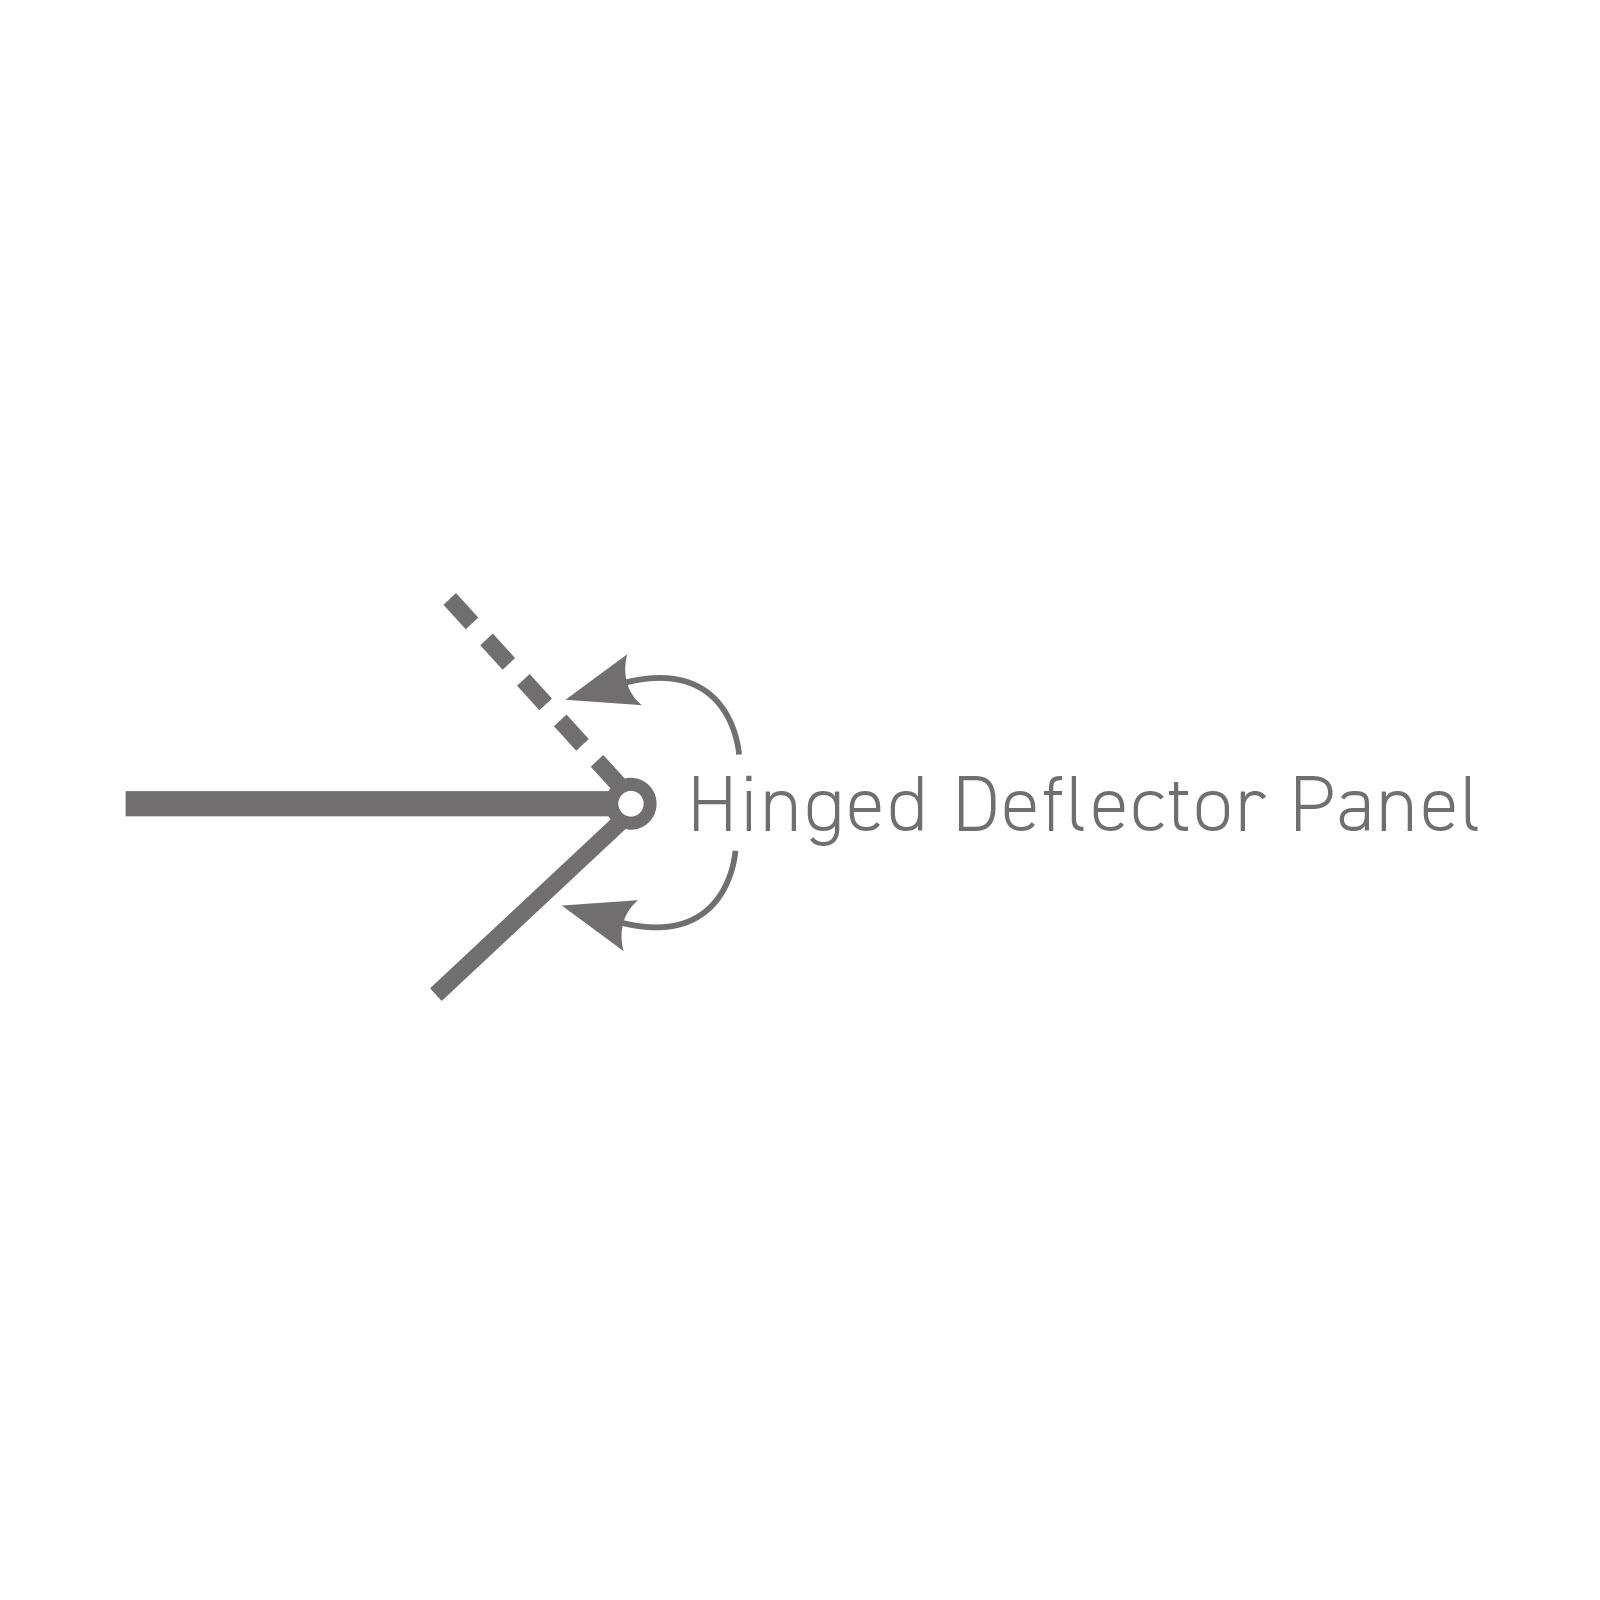 hinged-deflector-panel-icon